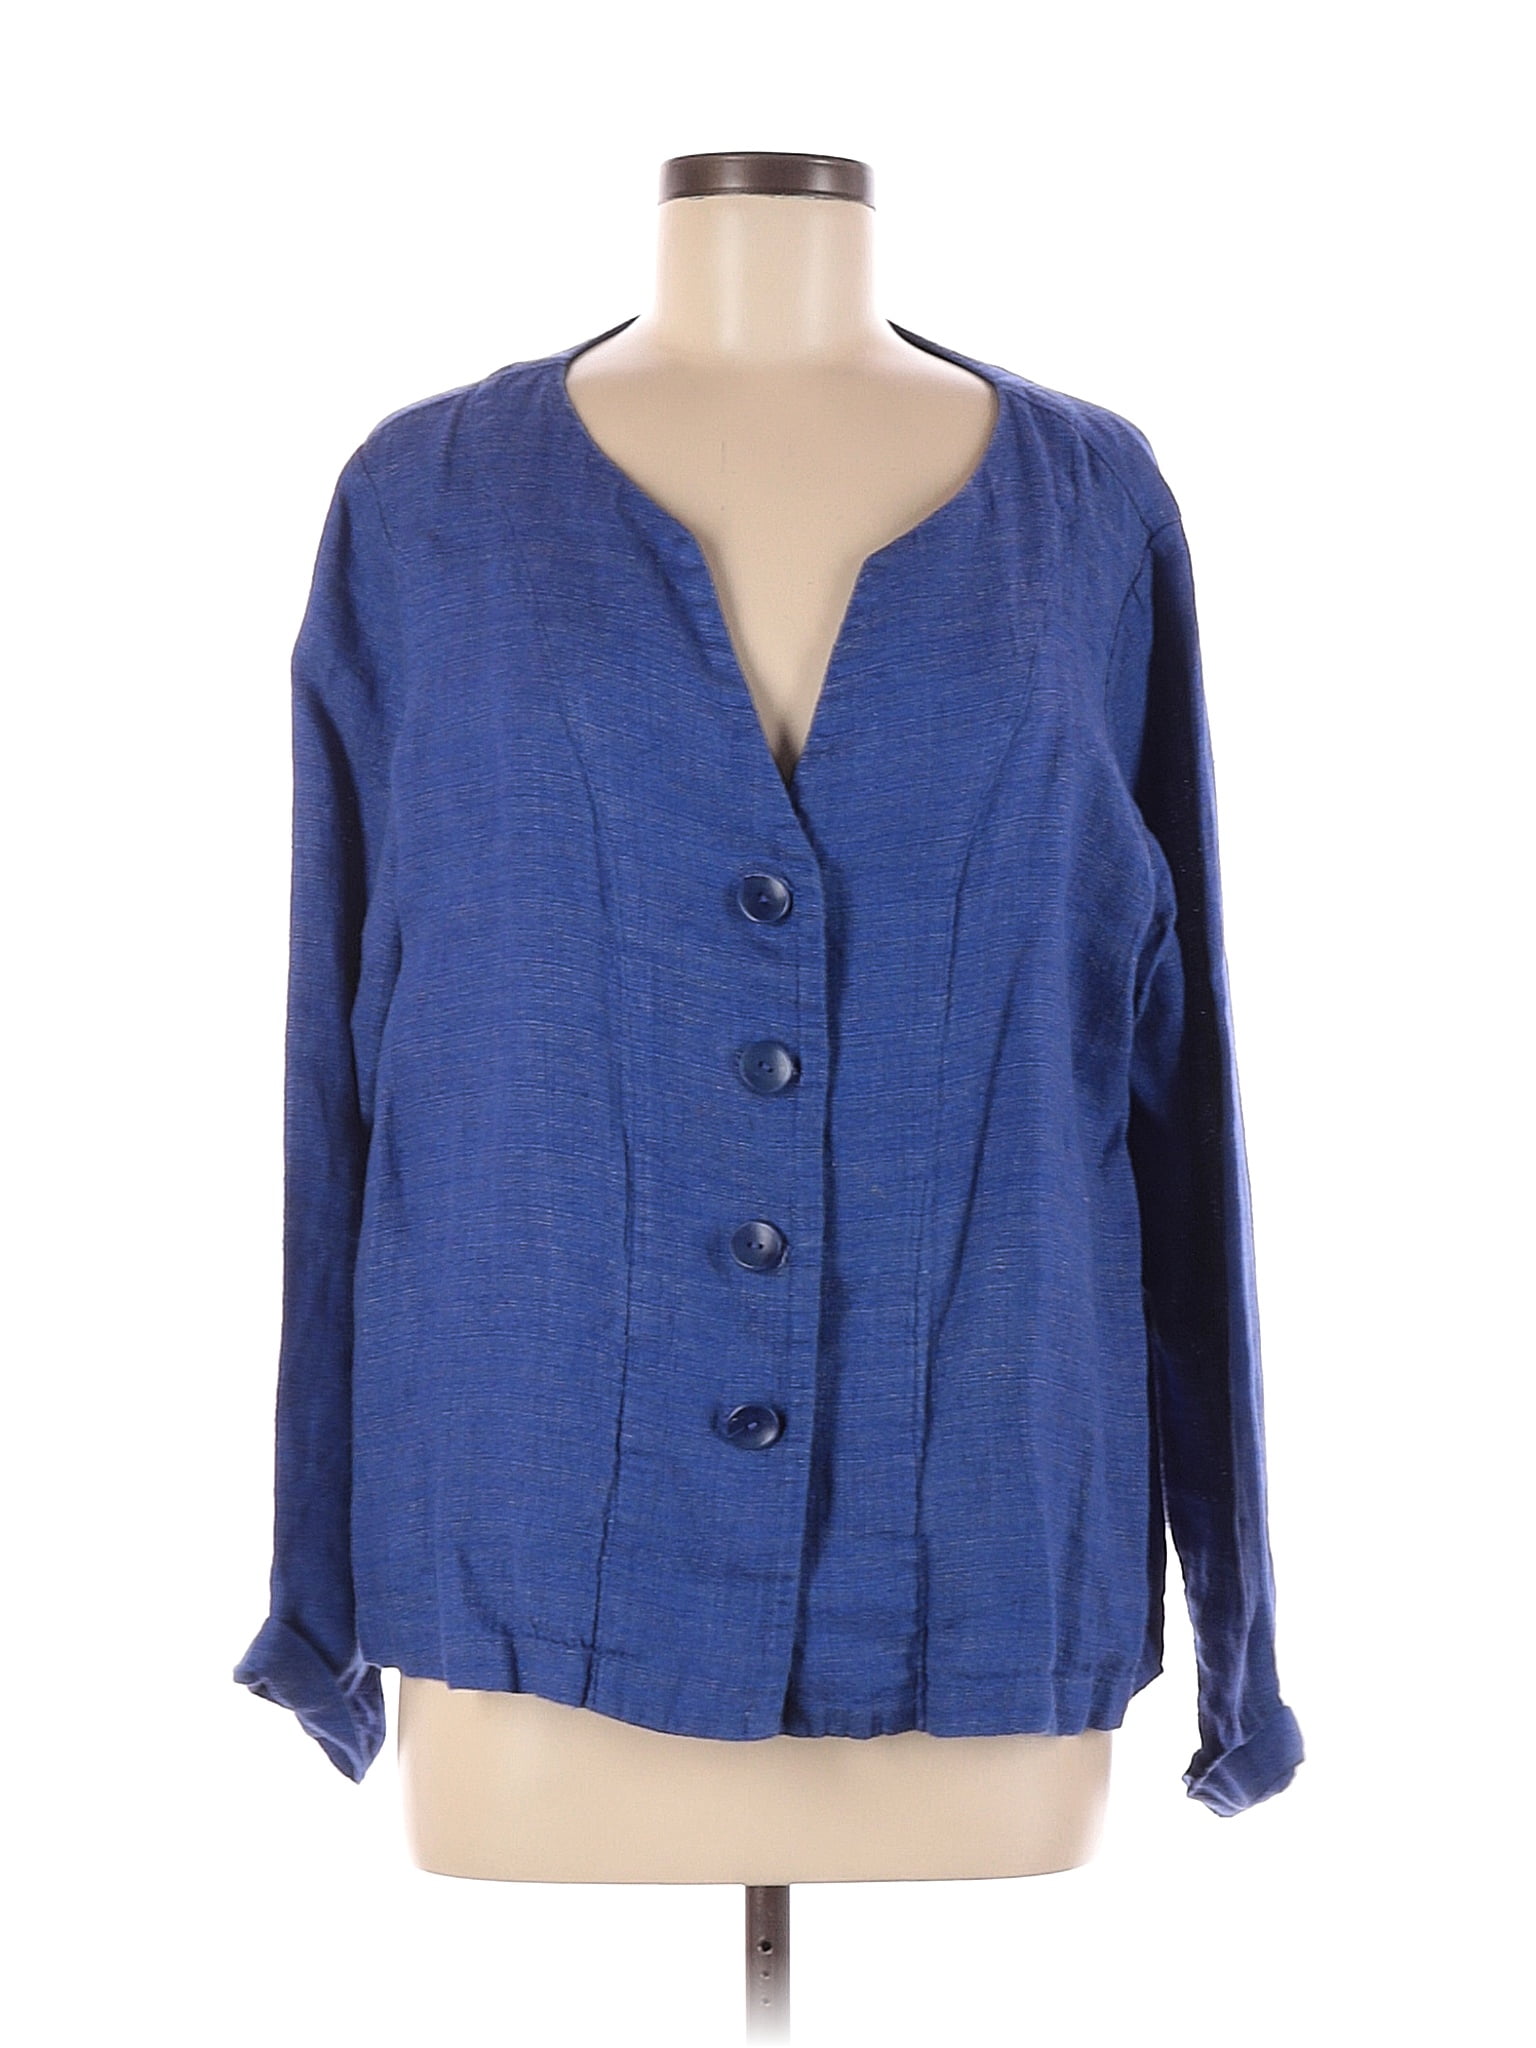 Flax 100% Linen Blue Jacket Size 6 (S) - 68% off | thredUP